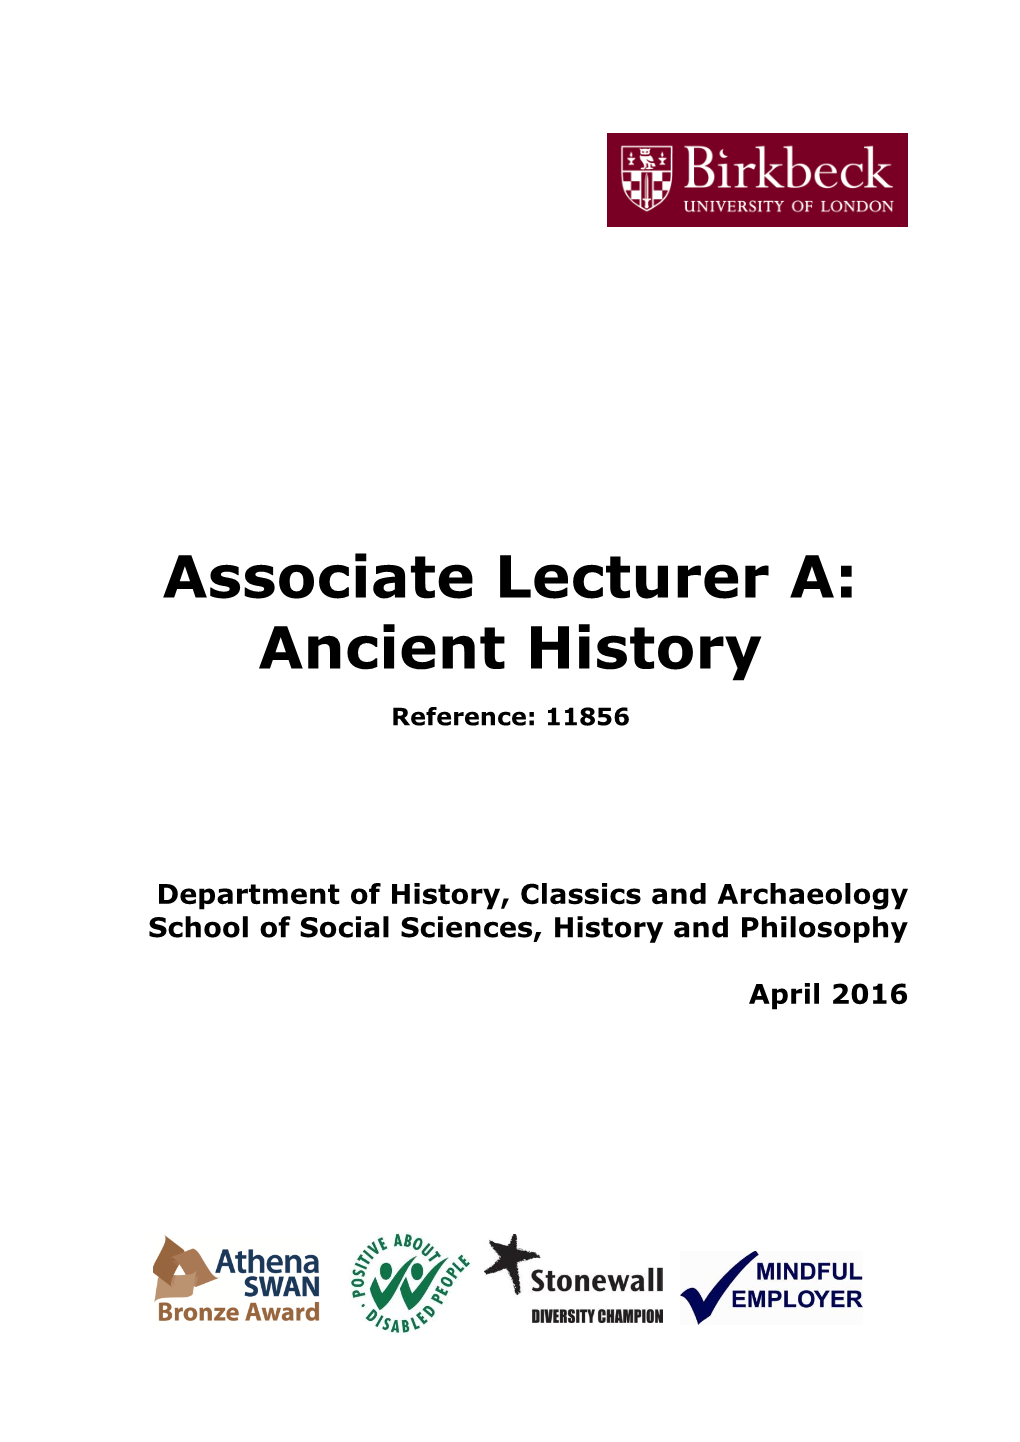 Associate Lecturer A: Ancient History